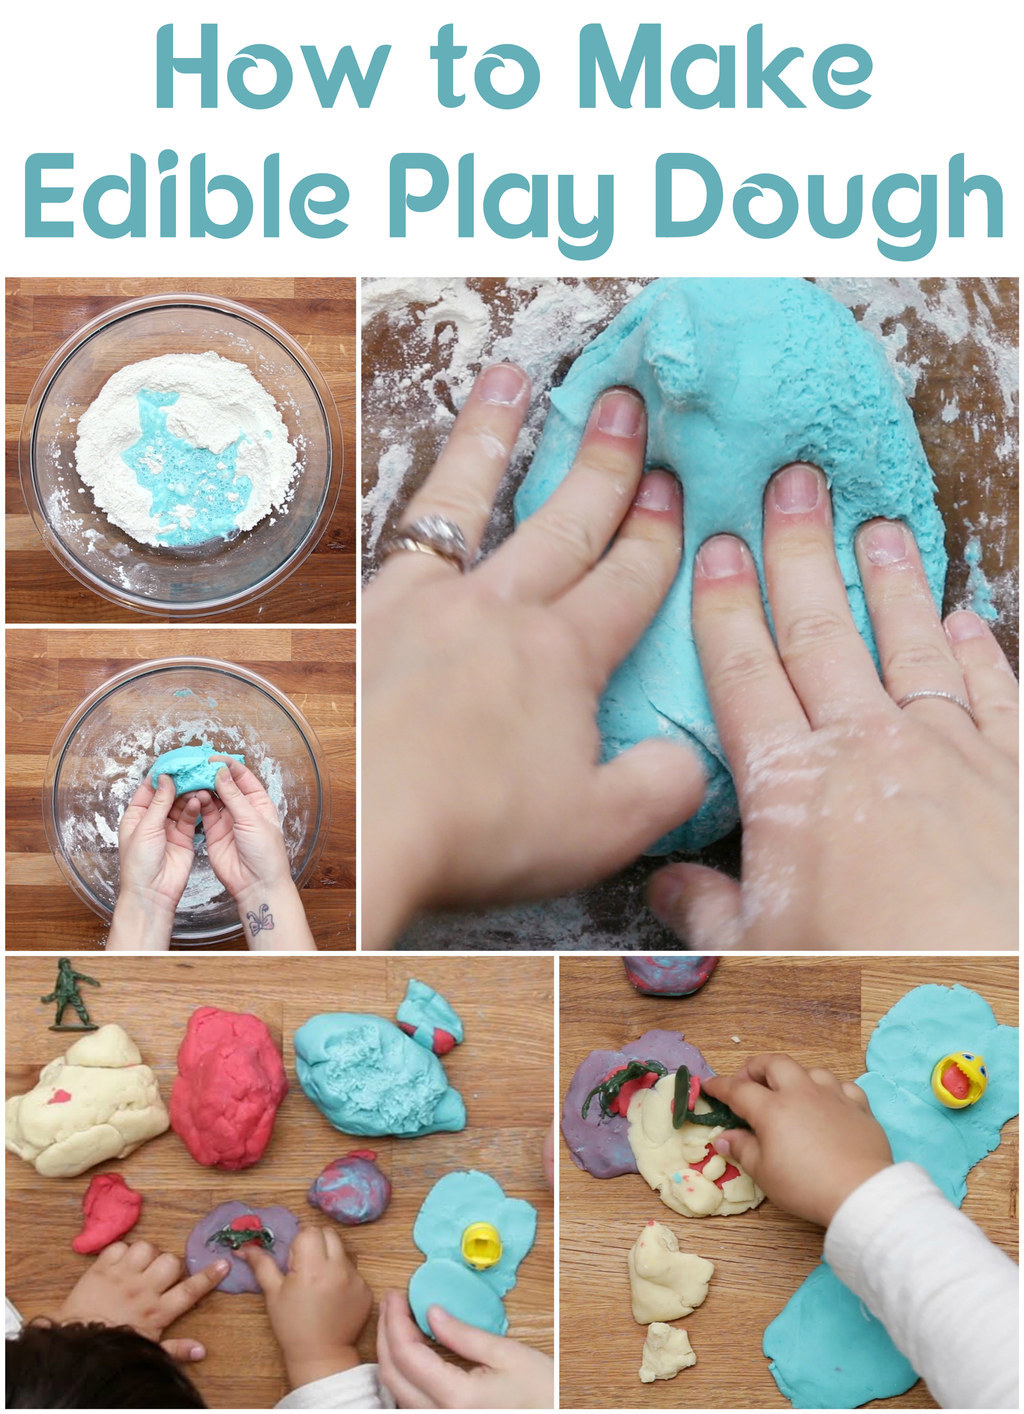 yes-you-can-make-edible-play-dough